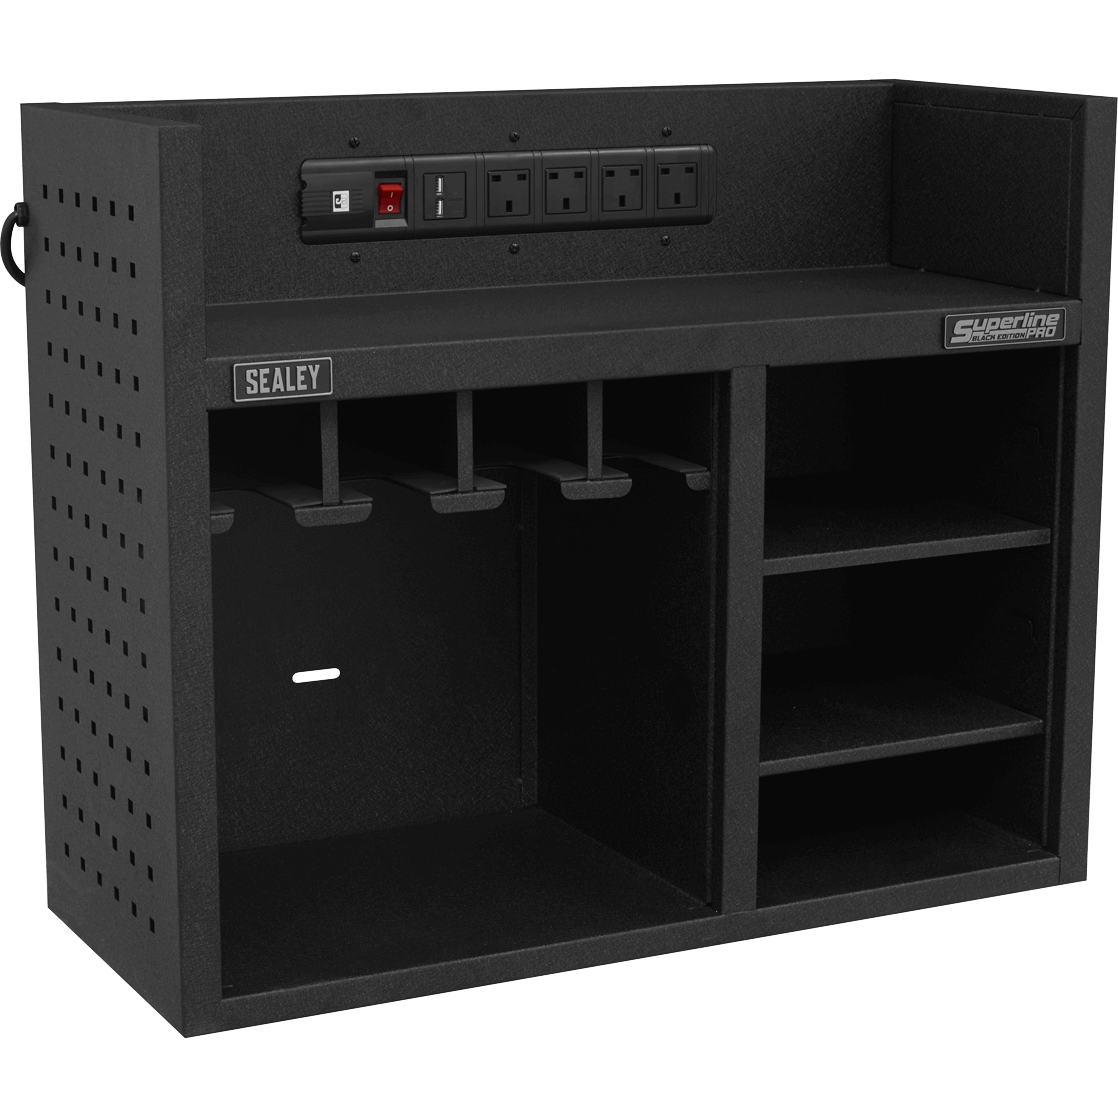 Sealey Superline Pro Power Tool Storage and Power Strip Unit Black